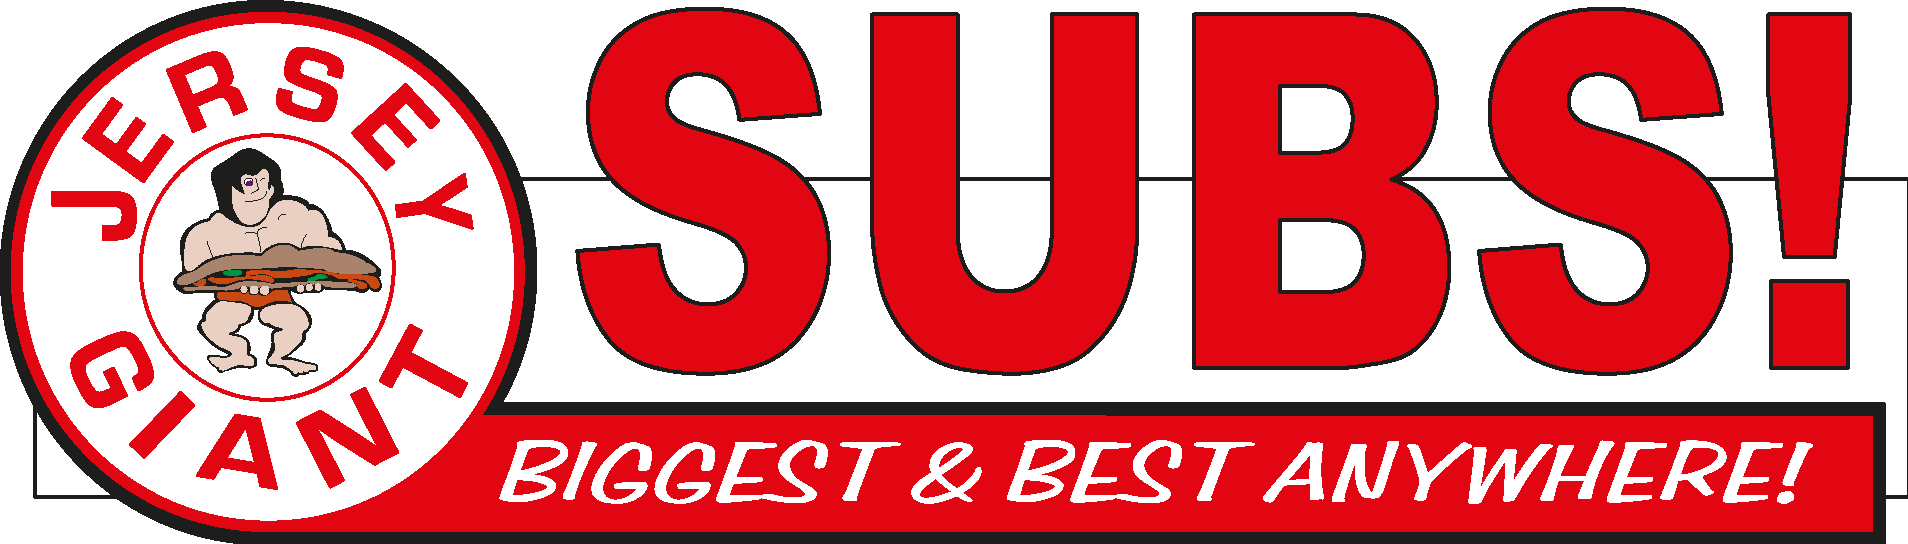 Jersey Giant Subs Logo Vector